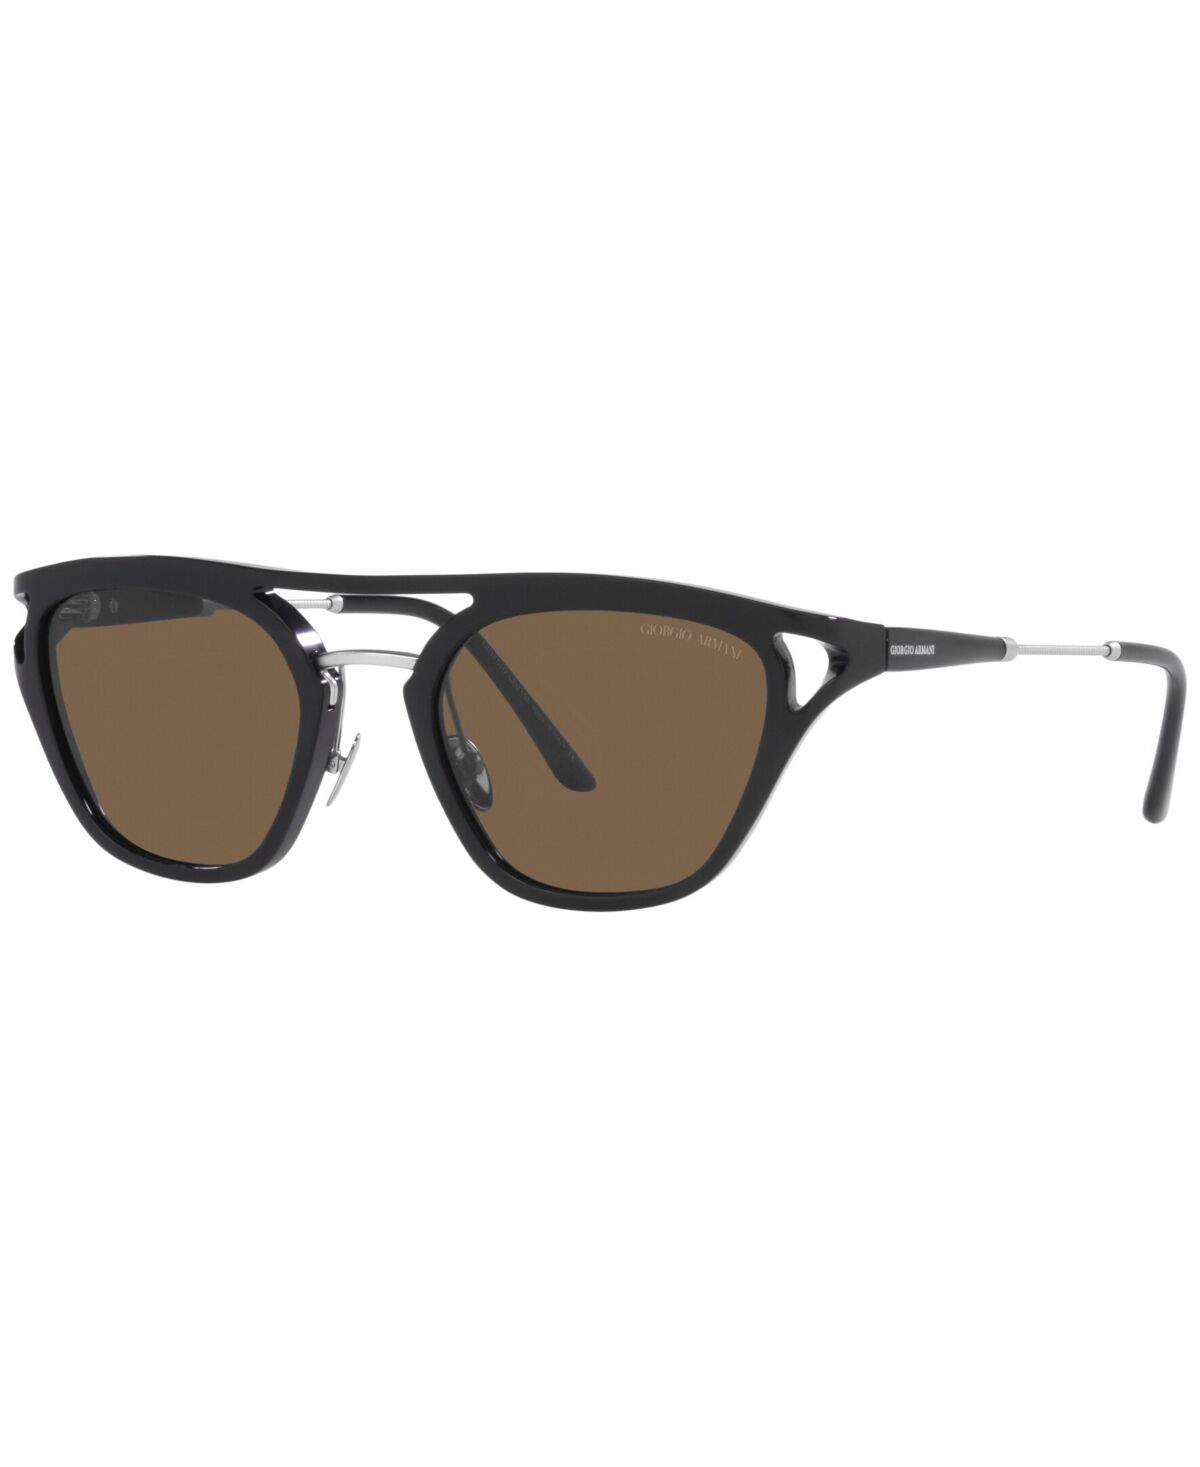 Giorgio Armani s Sunglasses, AR8158 51 - Black